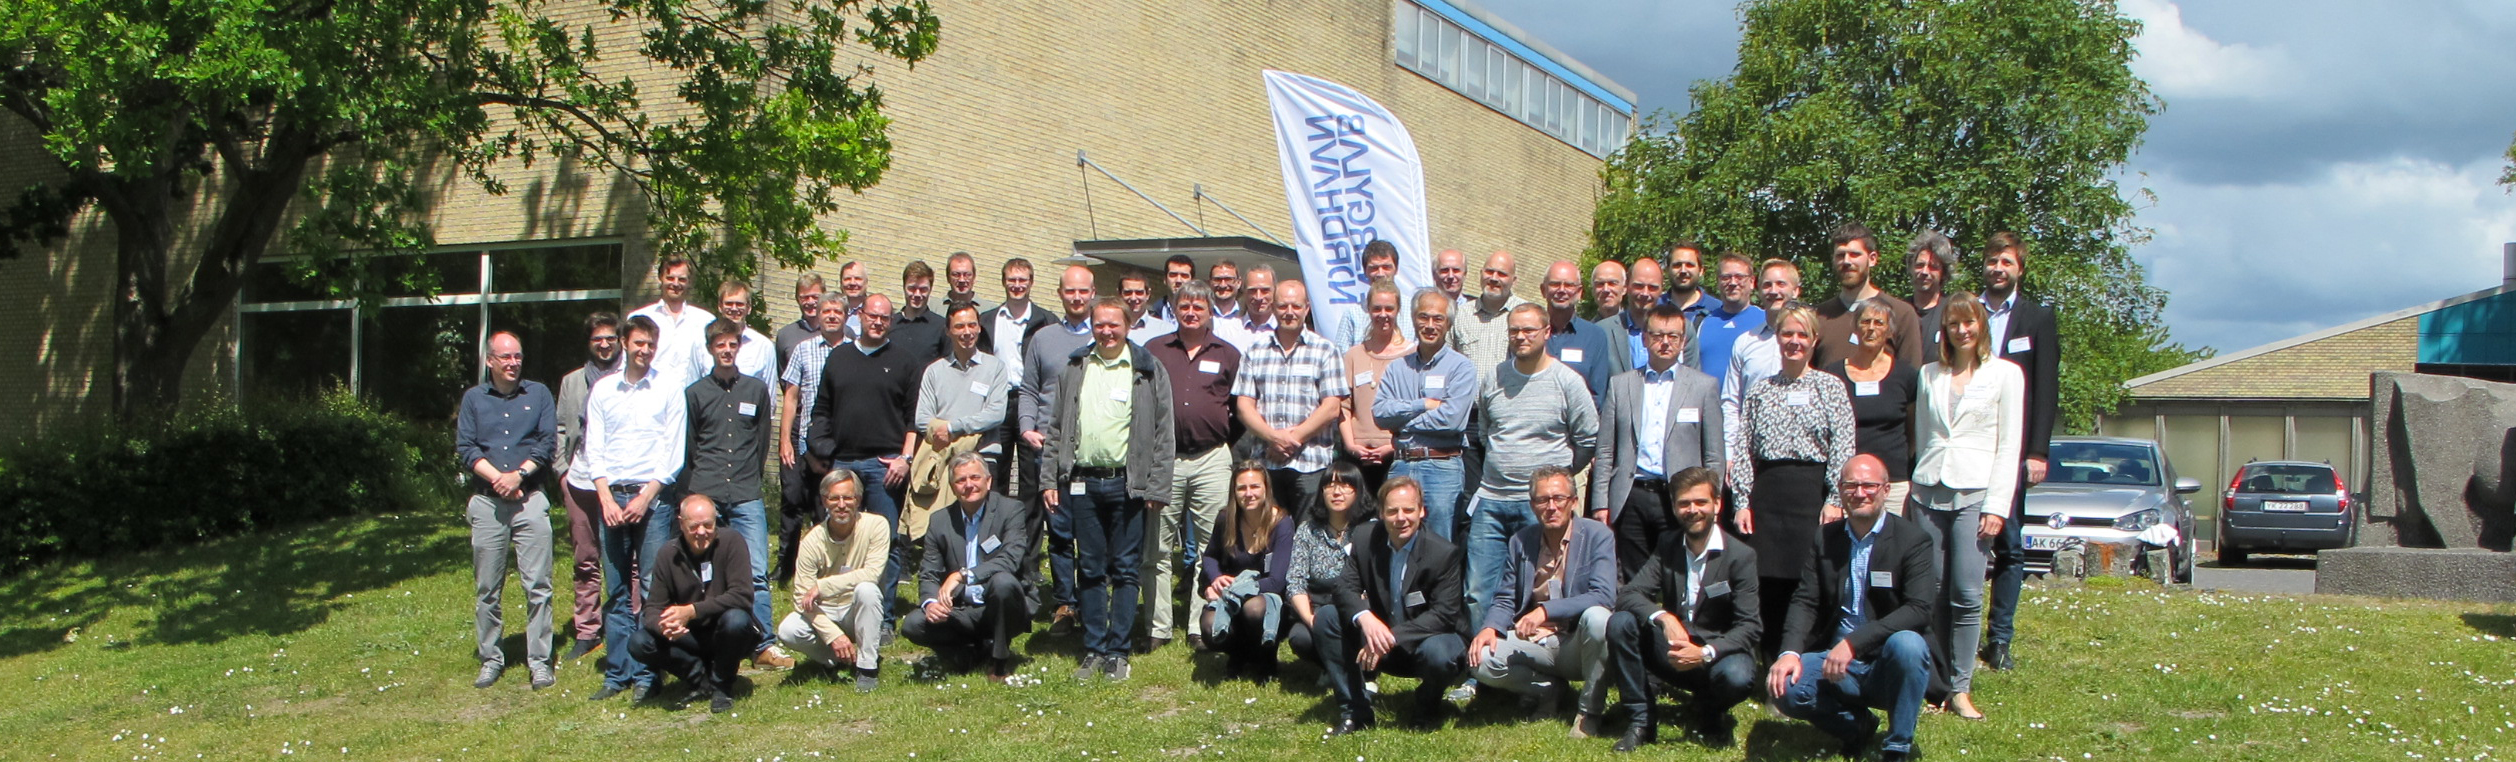 EnergyLab Nordhavn Kickoff meeting, DTU Risø Campus 9 June 2015